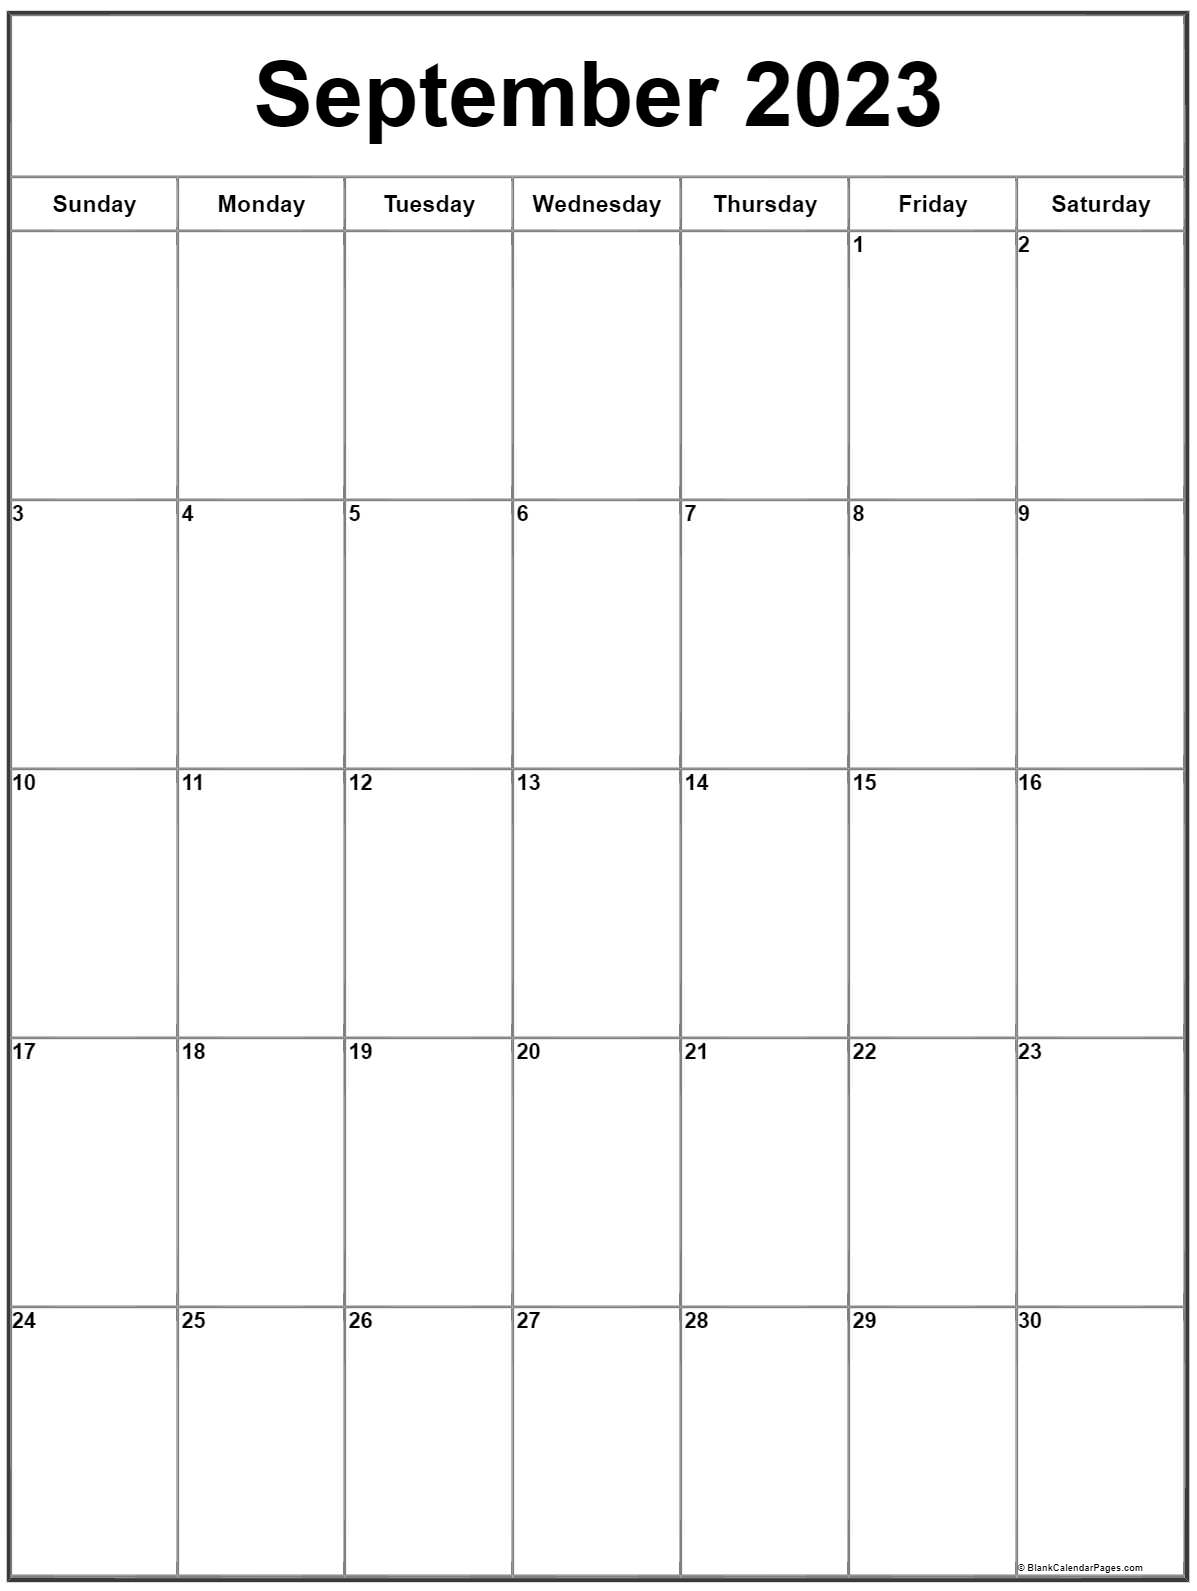 free-printable-calendar-september-2023-printable-world-holiday